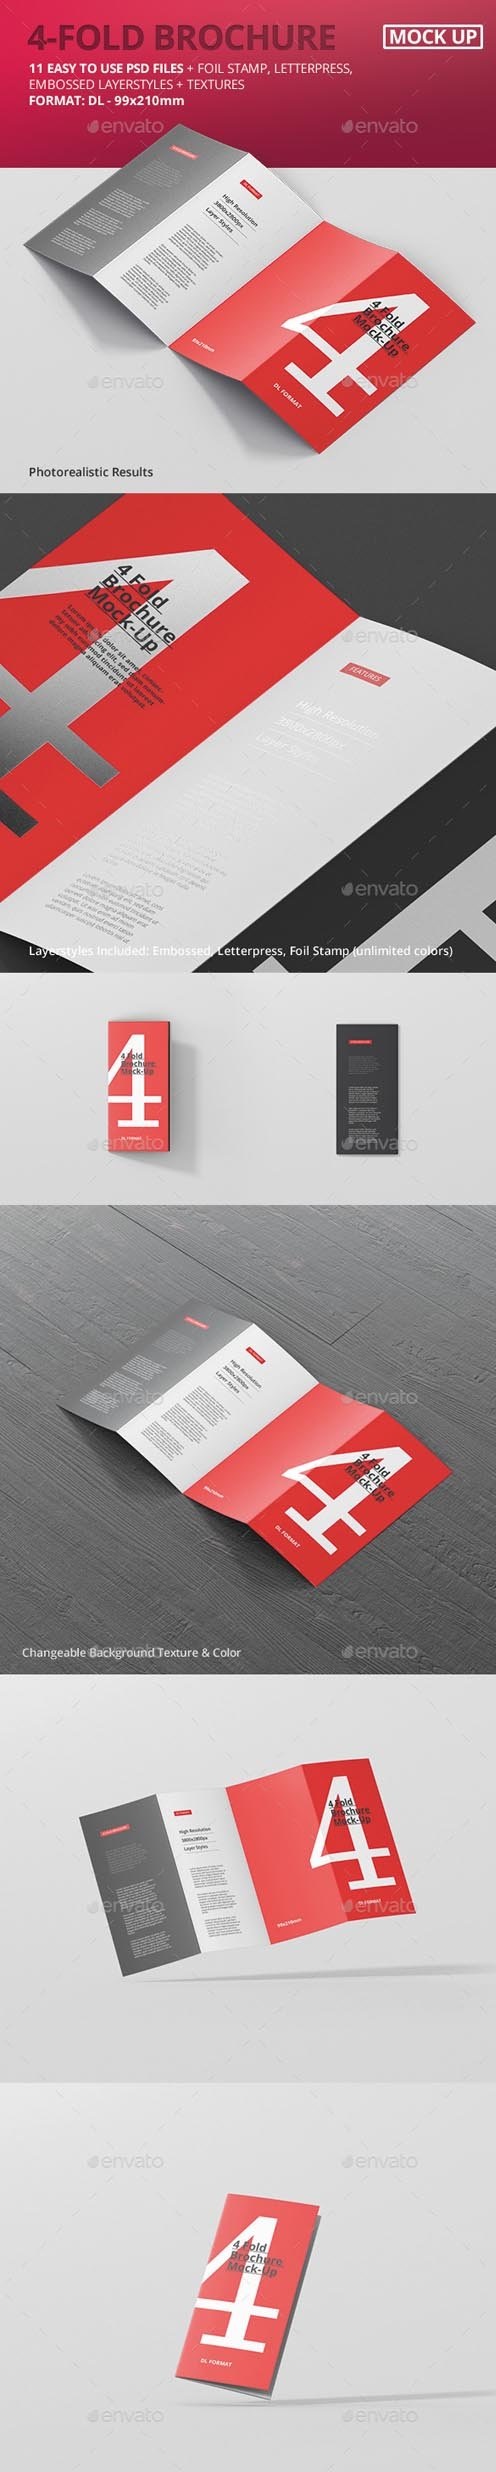 4-Fold Brochure Mockup - DL 99x210mm 20183322